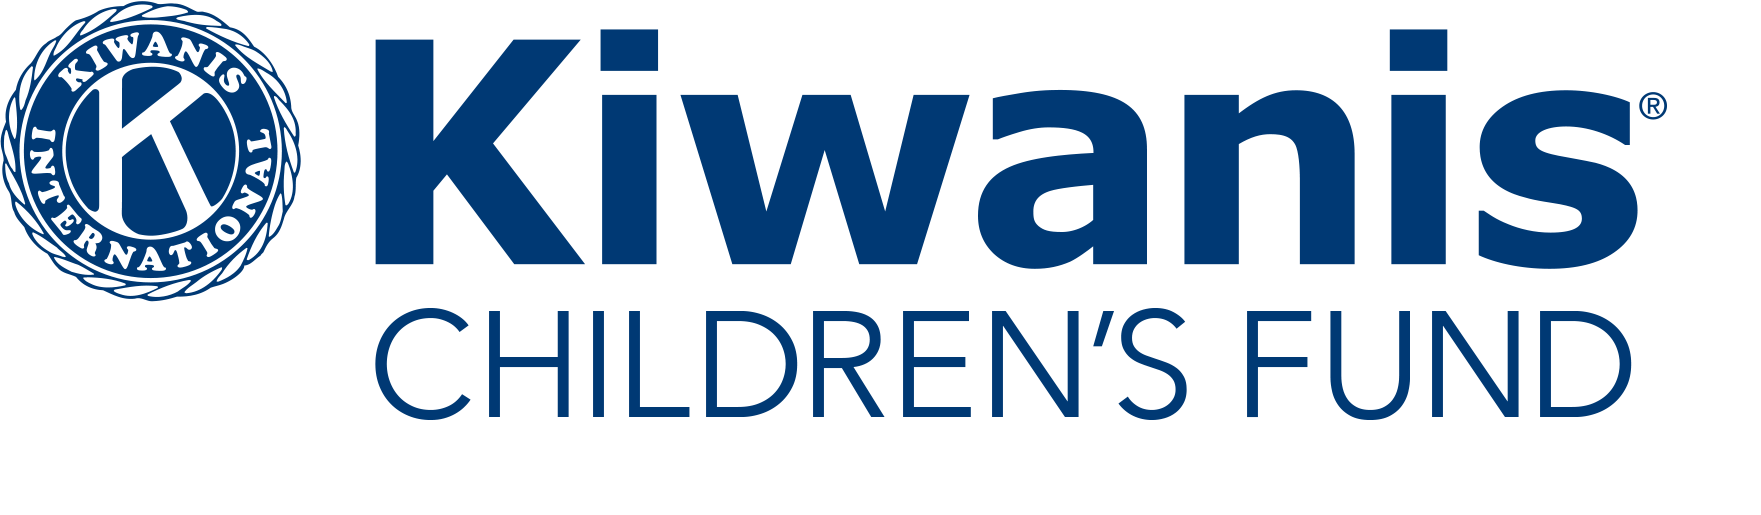 Kiwanis Childrens Fund